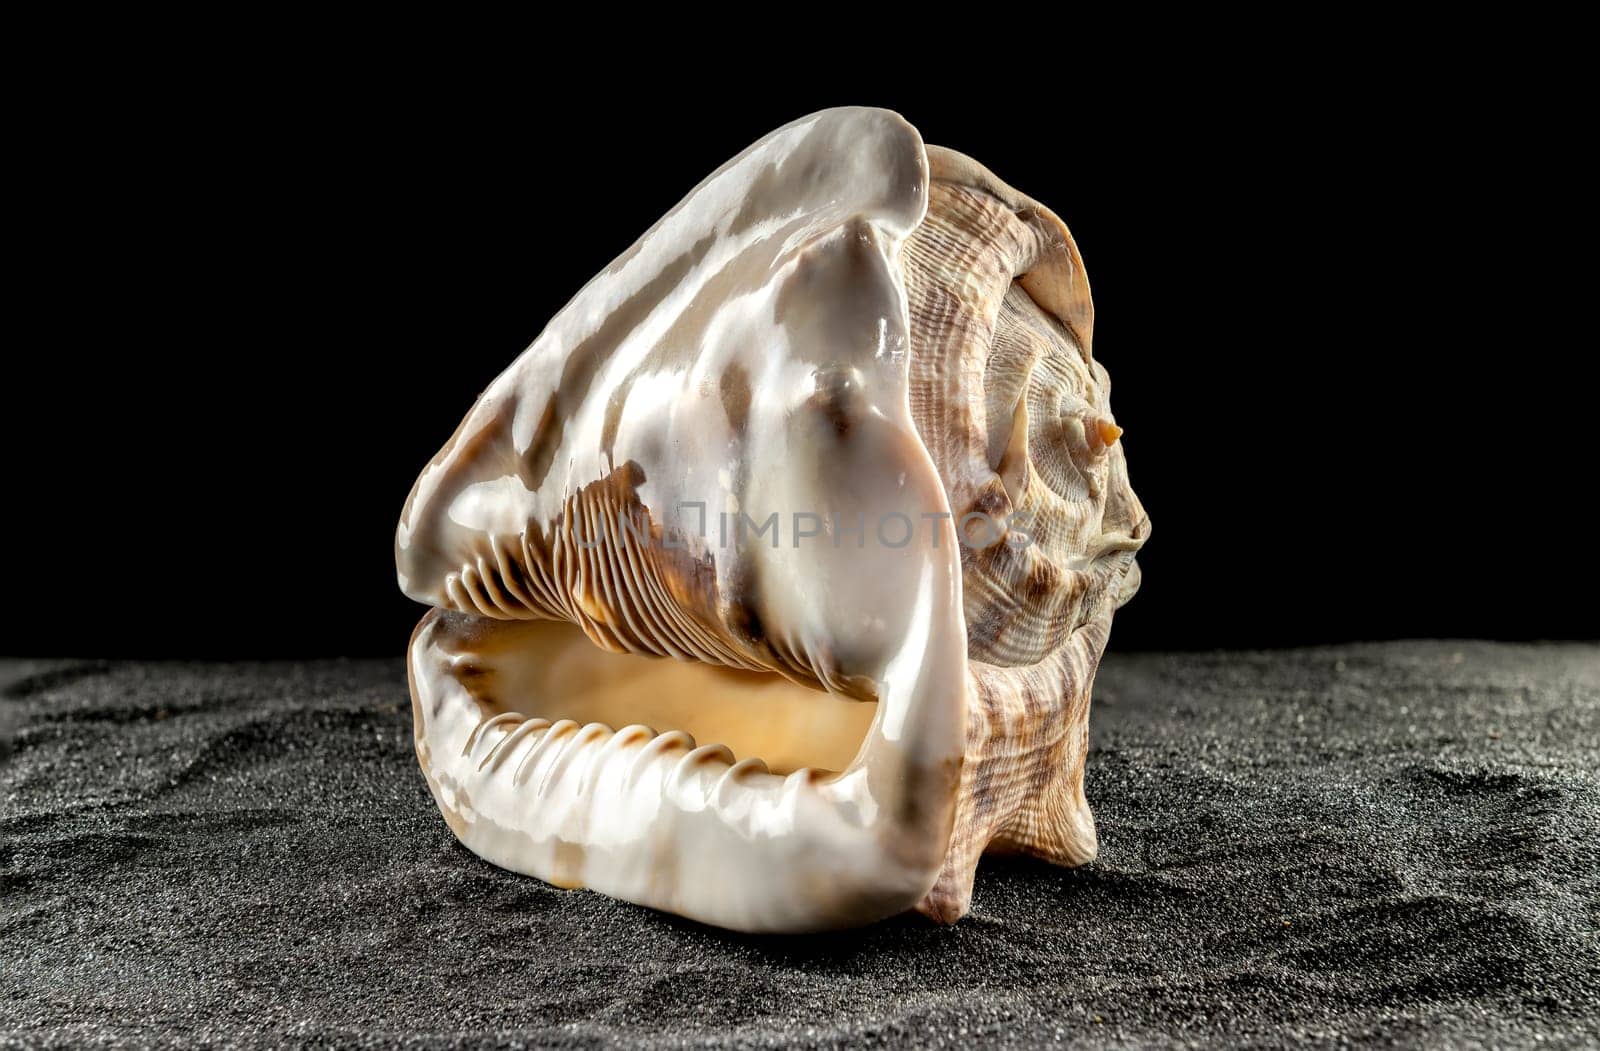 King Helmet seashell on a dark background by Multipedia